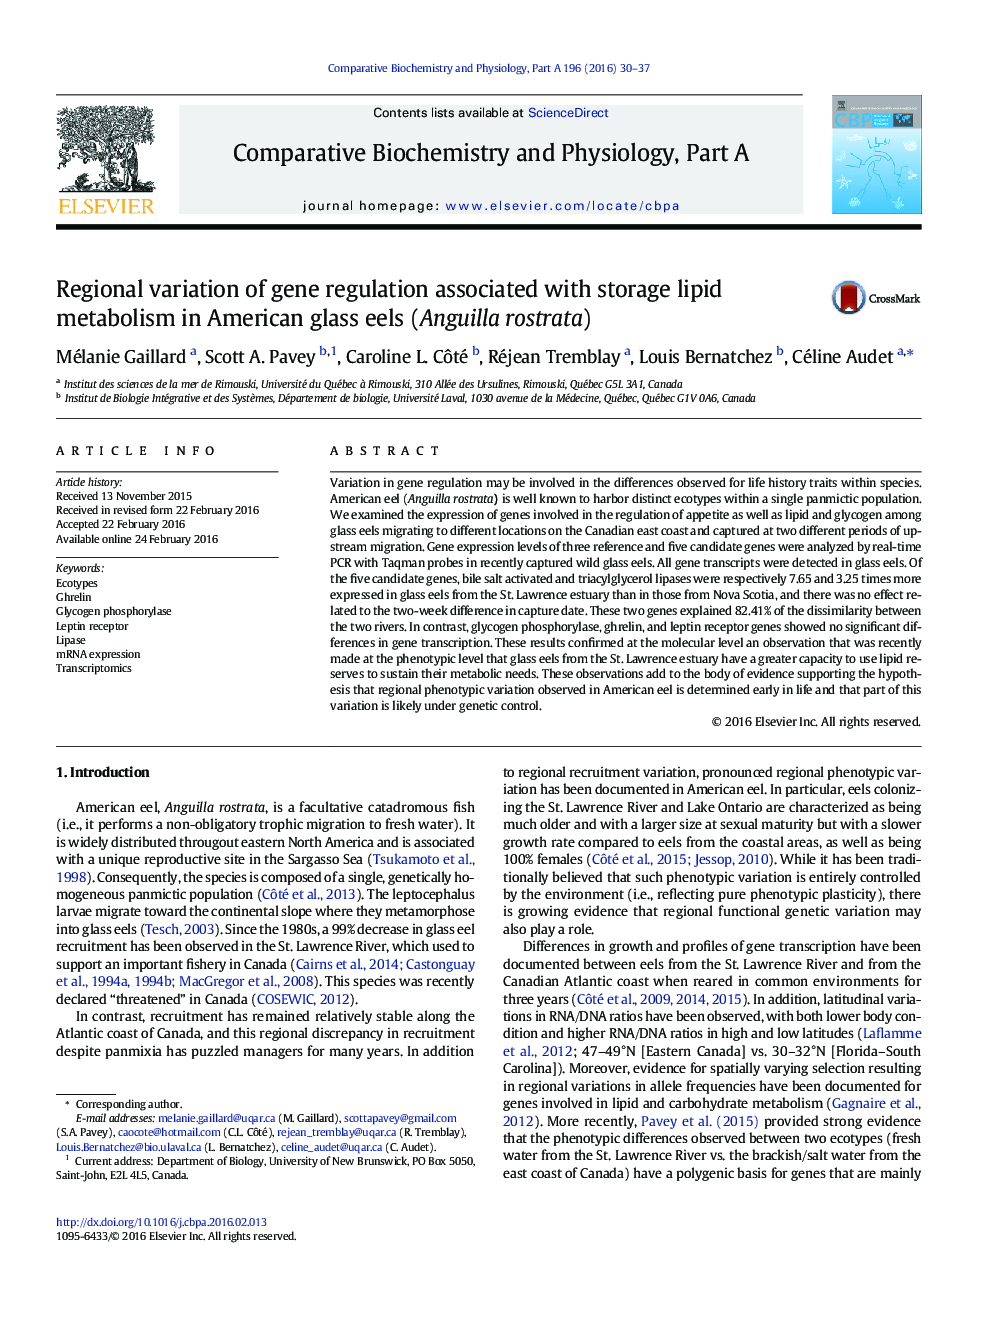 Regional variation of gene regulation associated with storage lipid metabolism in American glass eels (Anguilla rostrata)